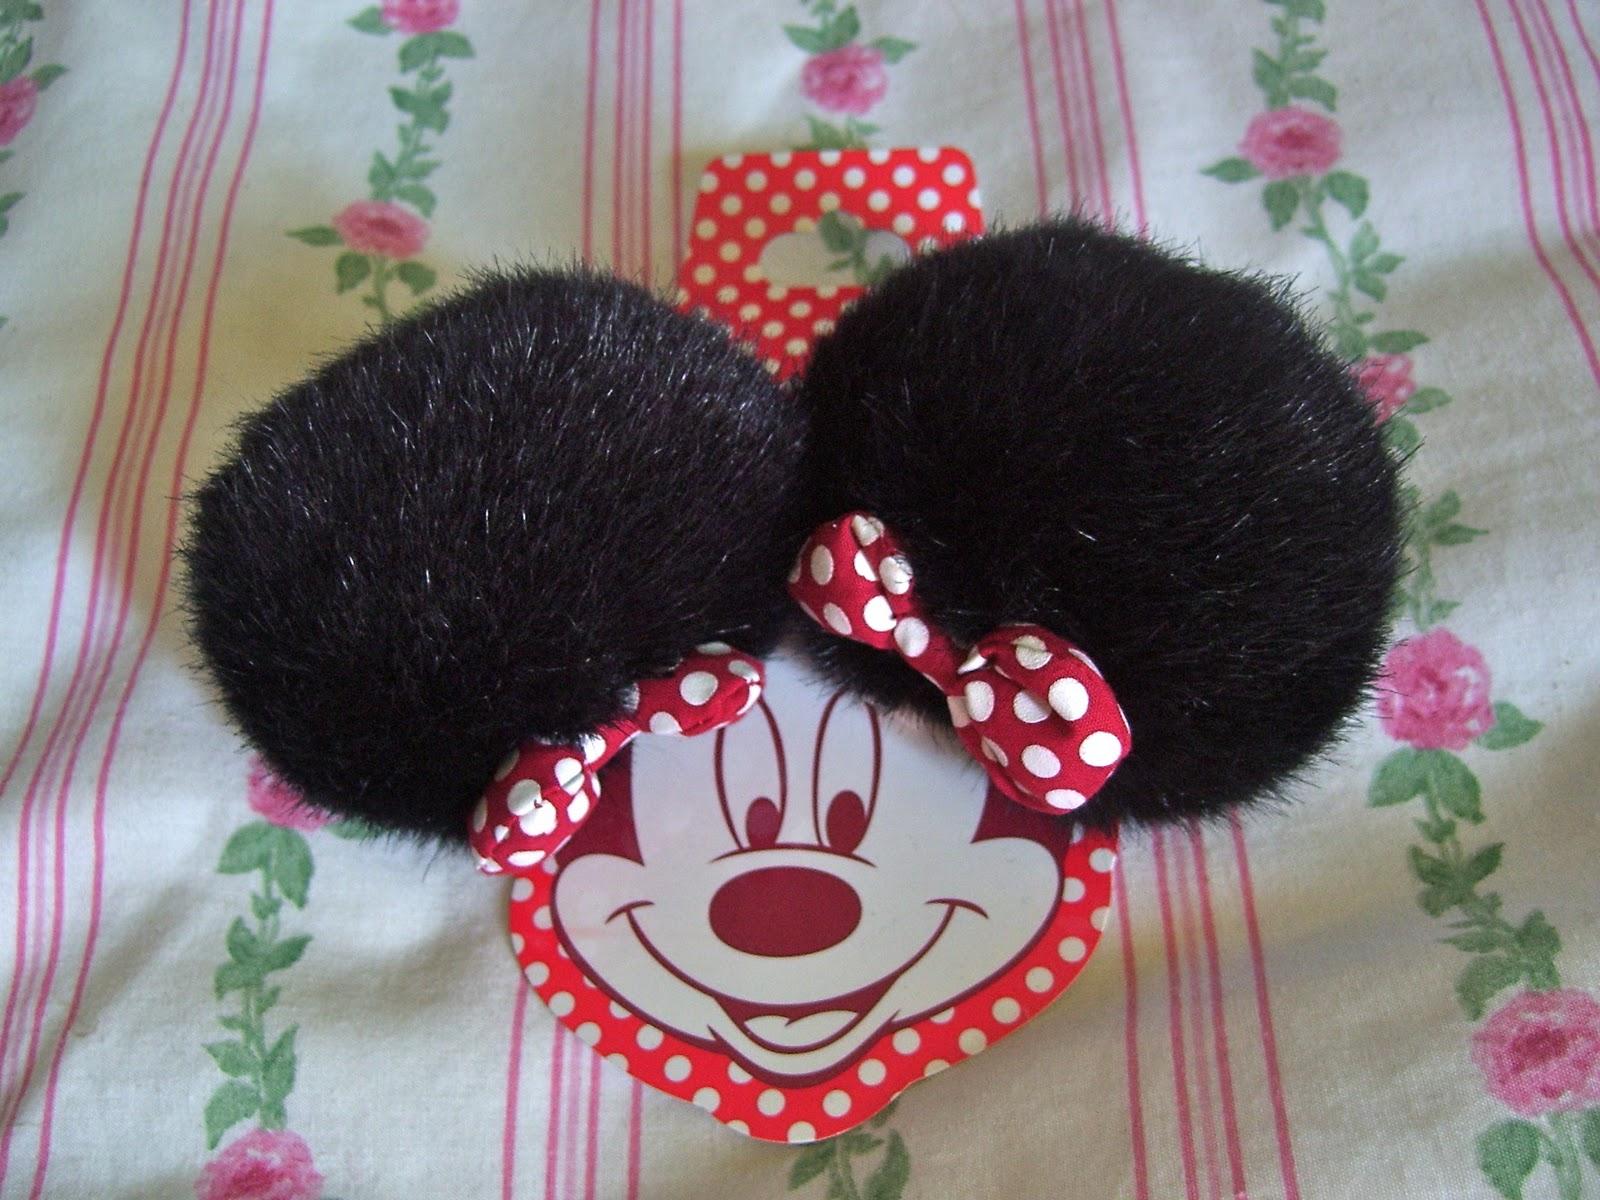 Minnie Mouse hair clips!